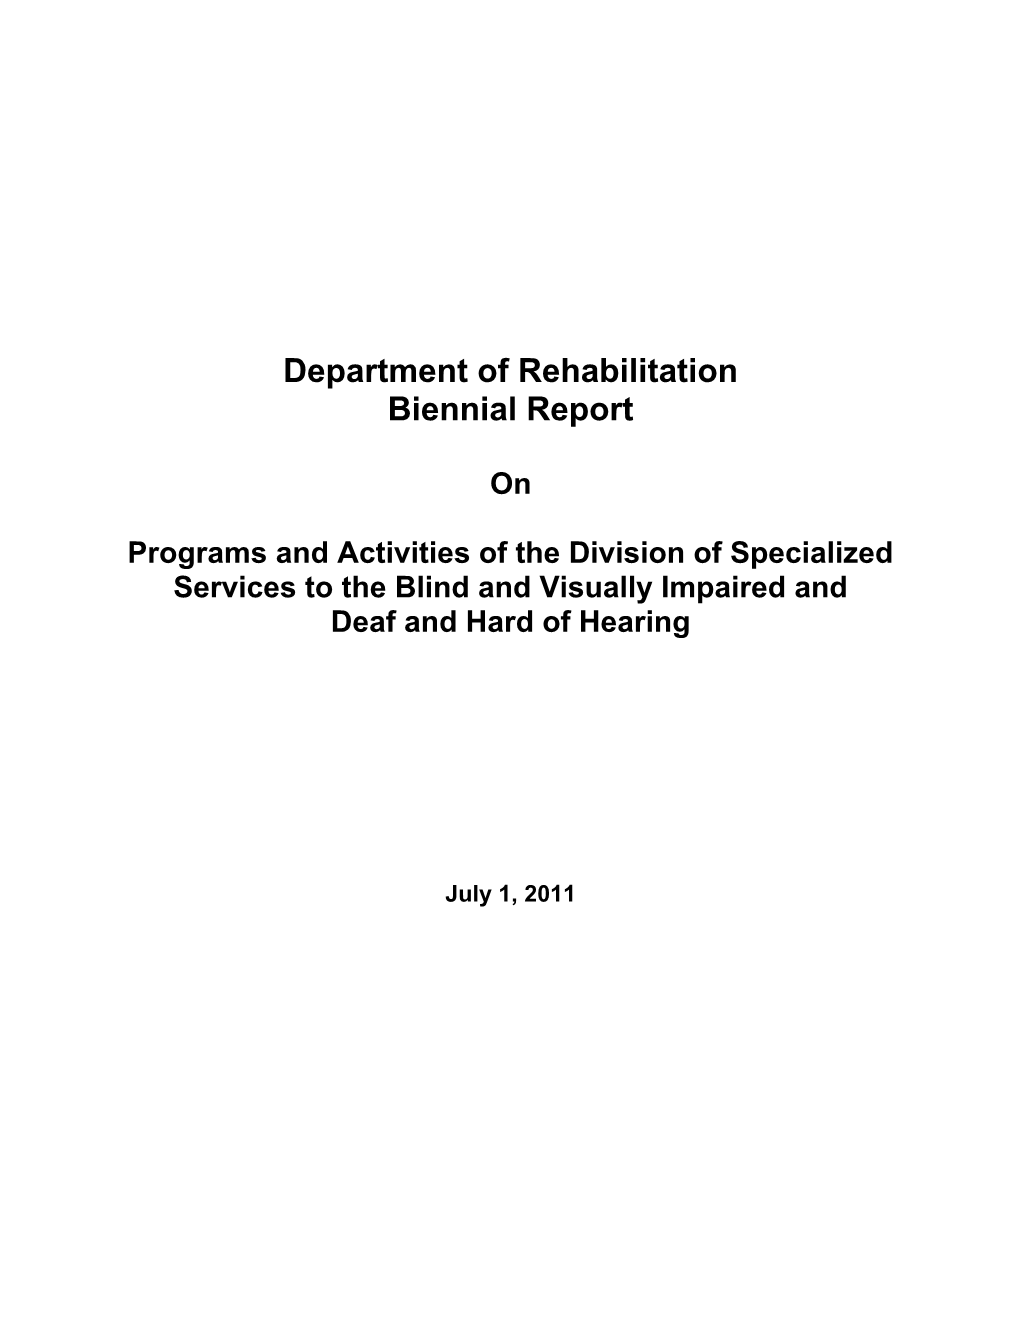 BVI & DHH Legislative Report 2009